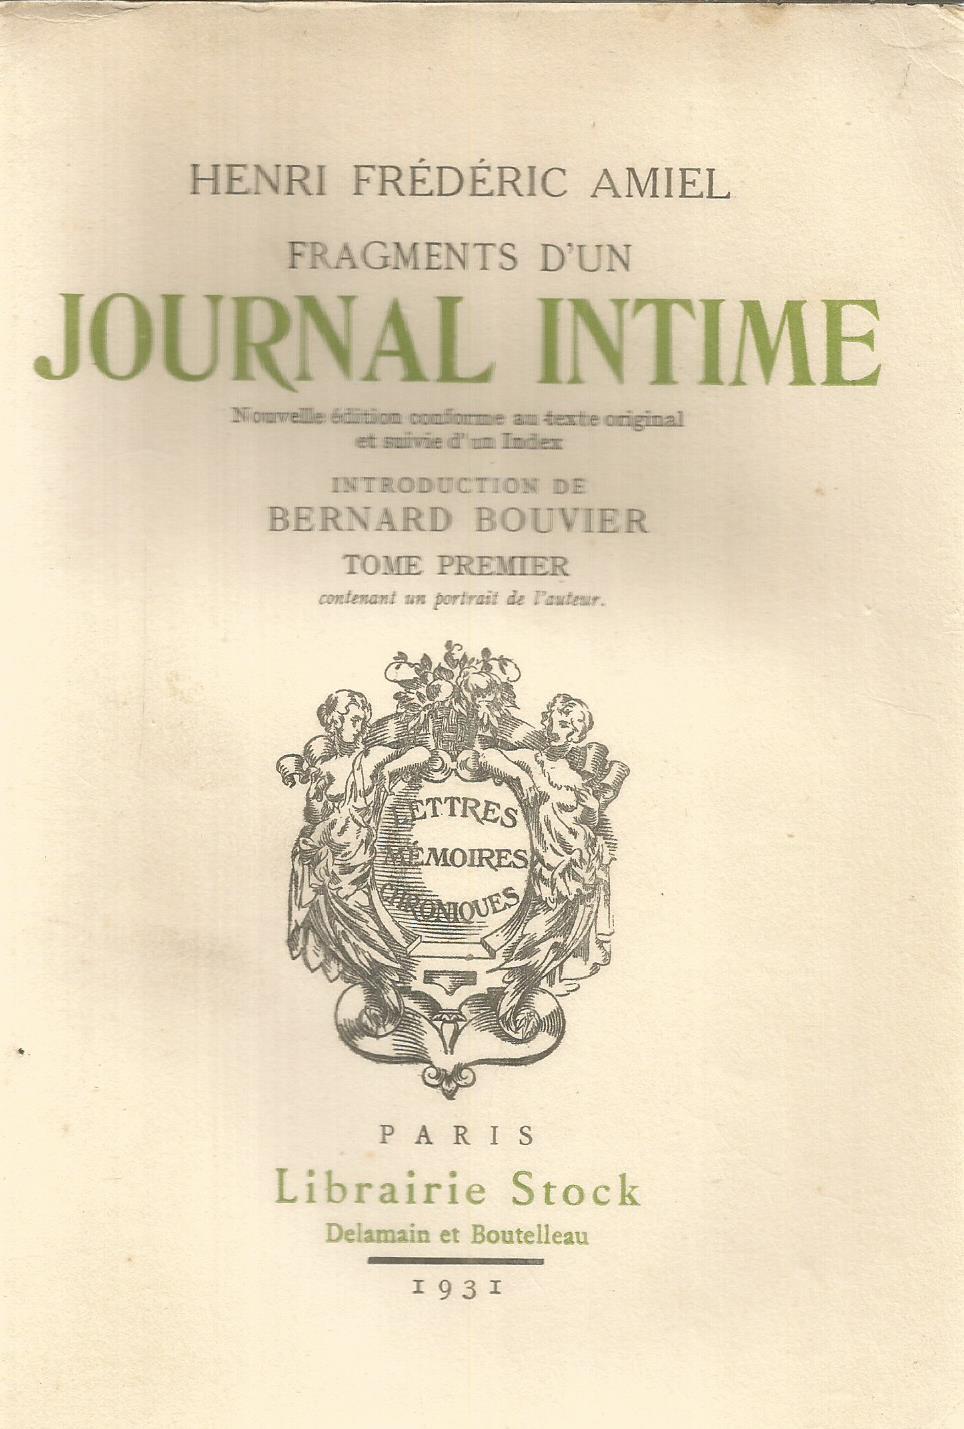 HENRI FRDRIC AMIEL JOURNAL INTIME PDF